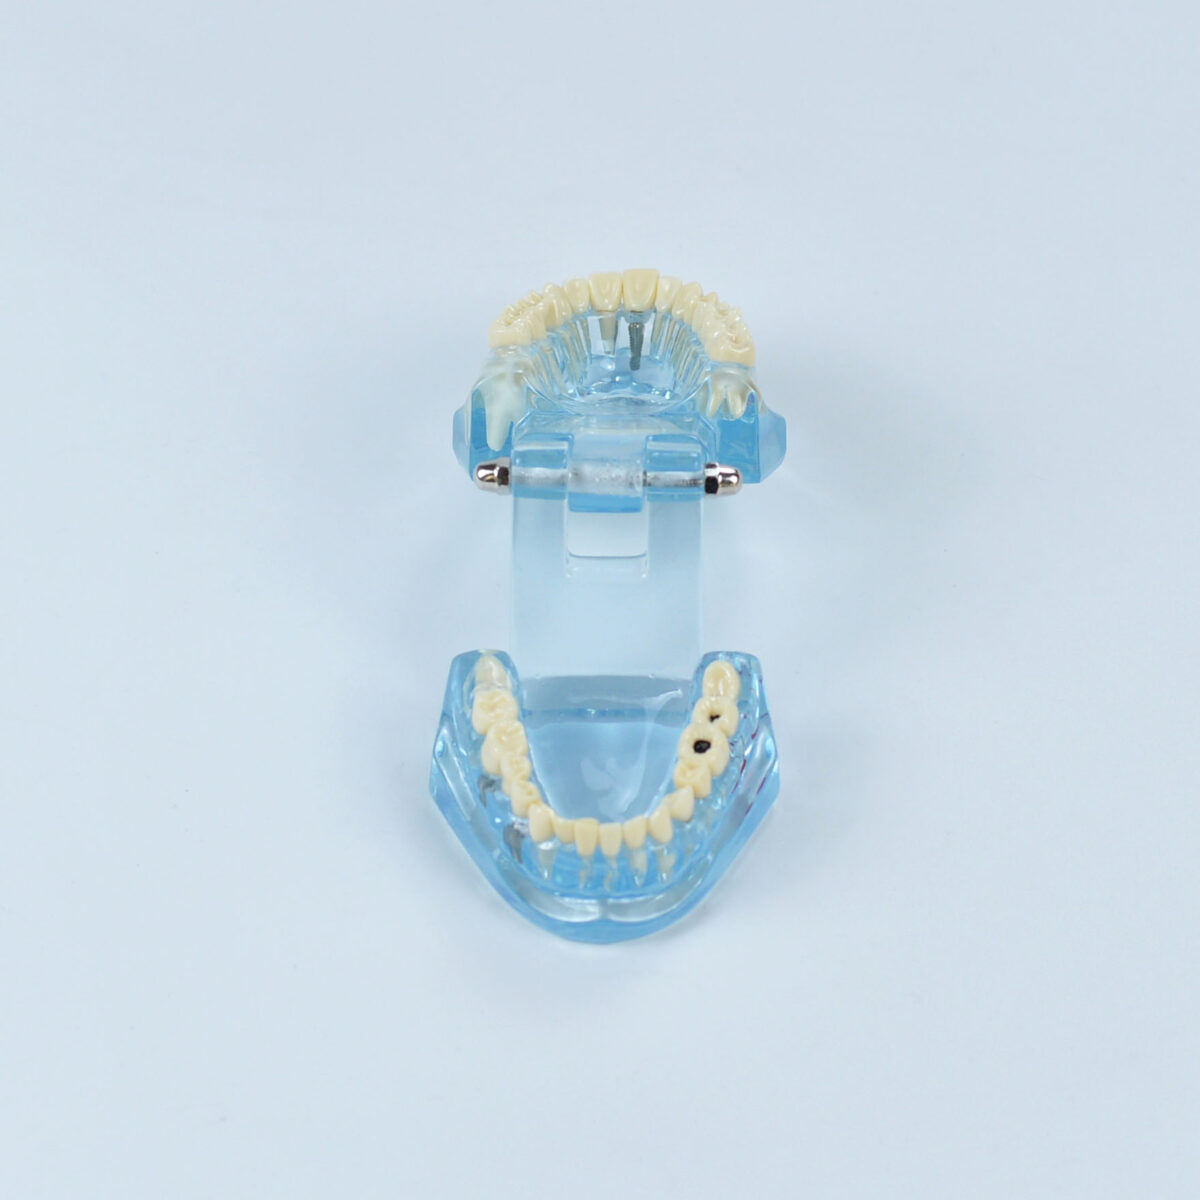 Patient education dental implant models